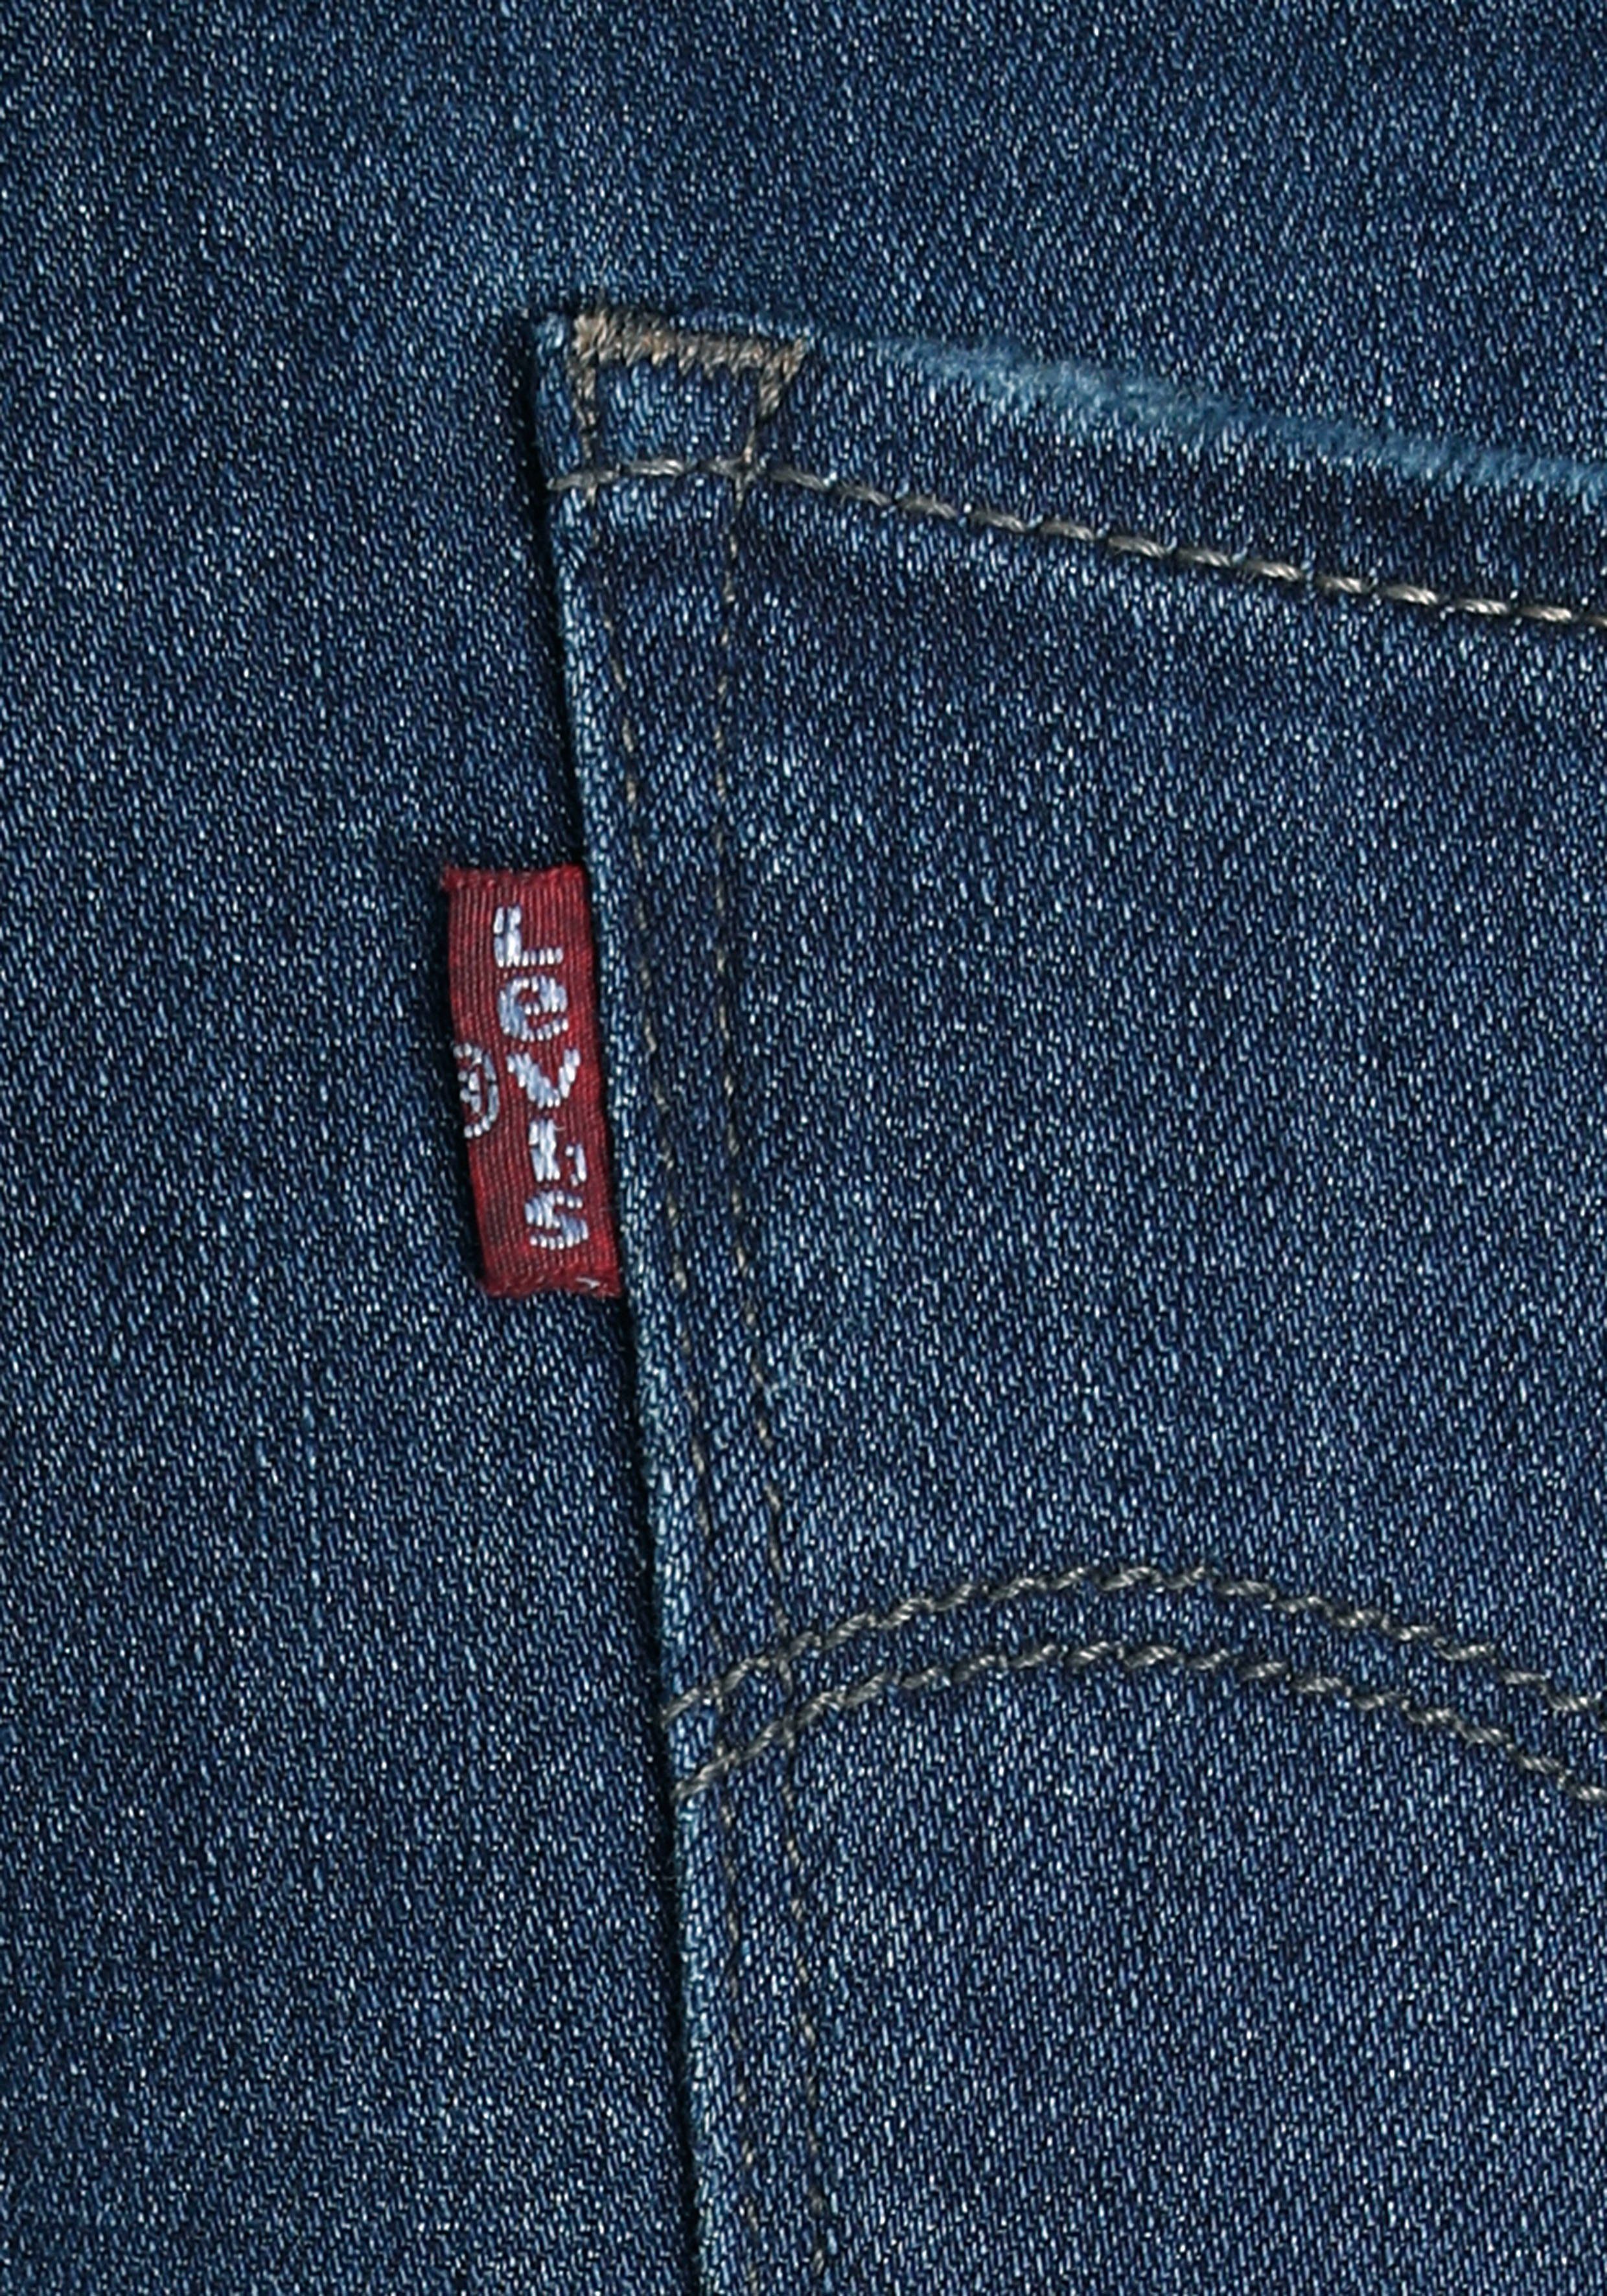 indigo 311 Skinny in 5-Pocket-Stil im Slim-fit-Jeans Shaping dark Levi's® worn